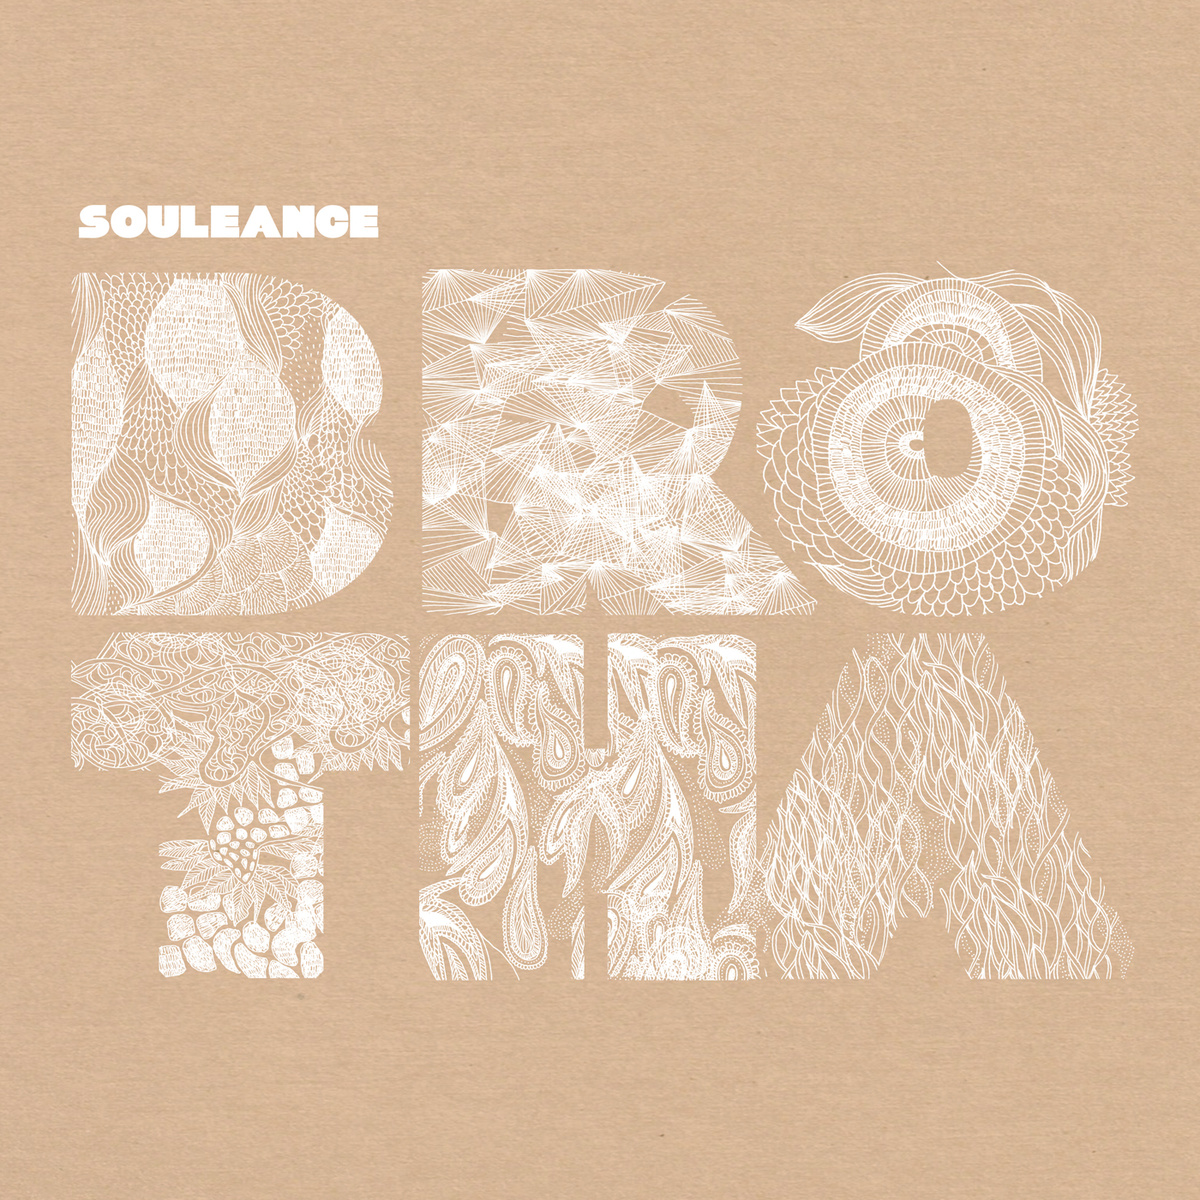 Souleance "Brotha" Release